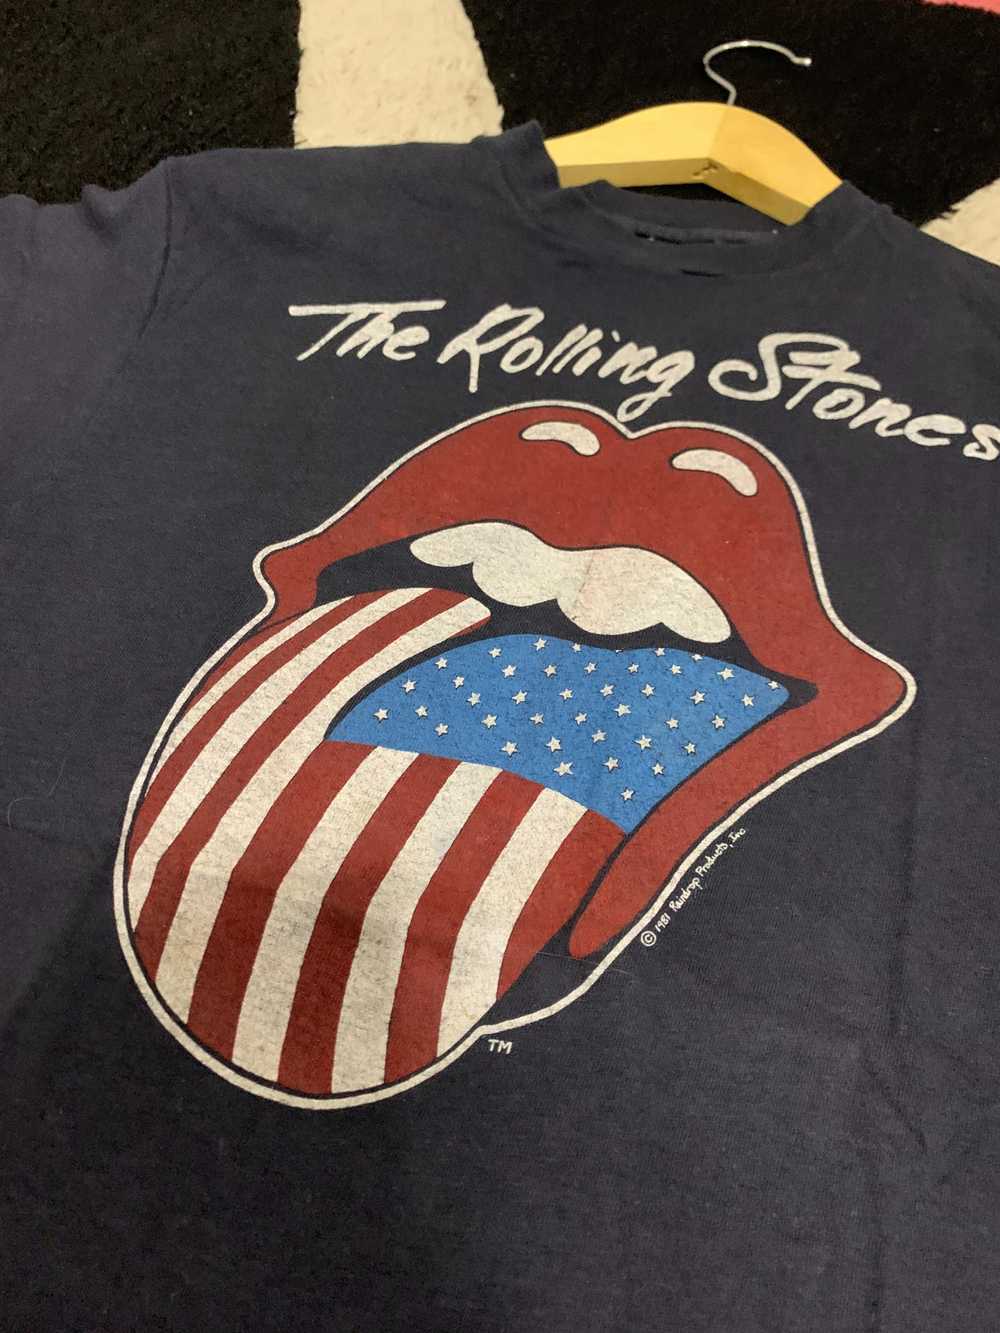 Vintage 80s The Rolling Stones US Tour 1981 - image 1